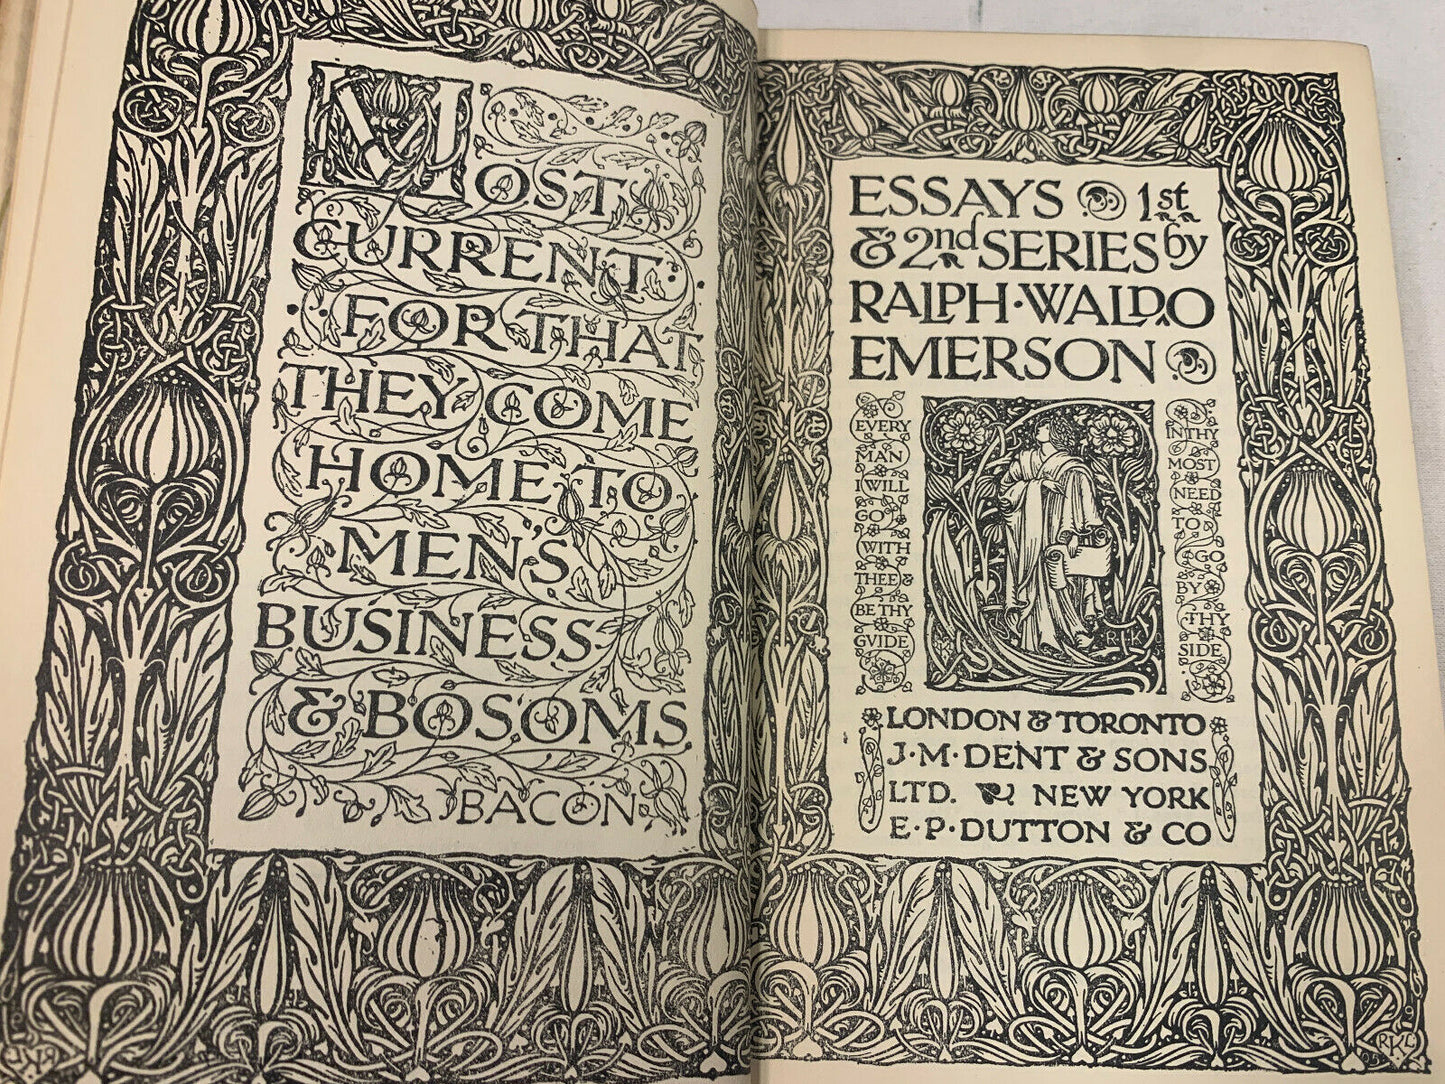 Essays 1st & 2nd Series by Ralph Waldo Emerson Everyman's Library 1930